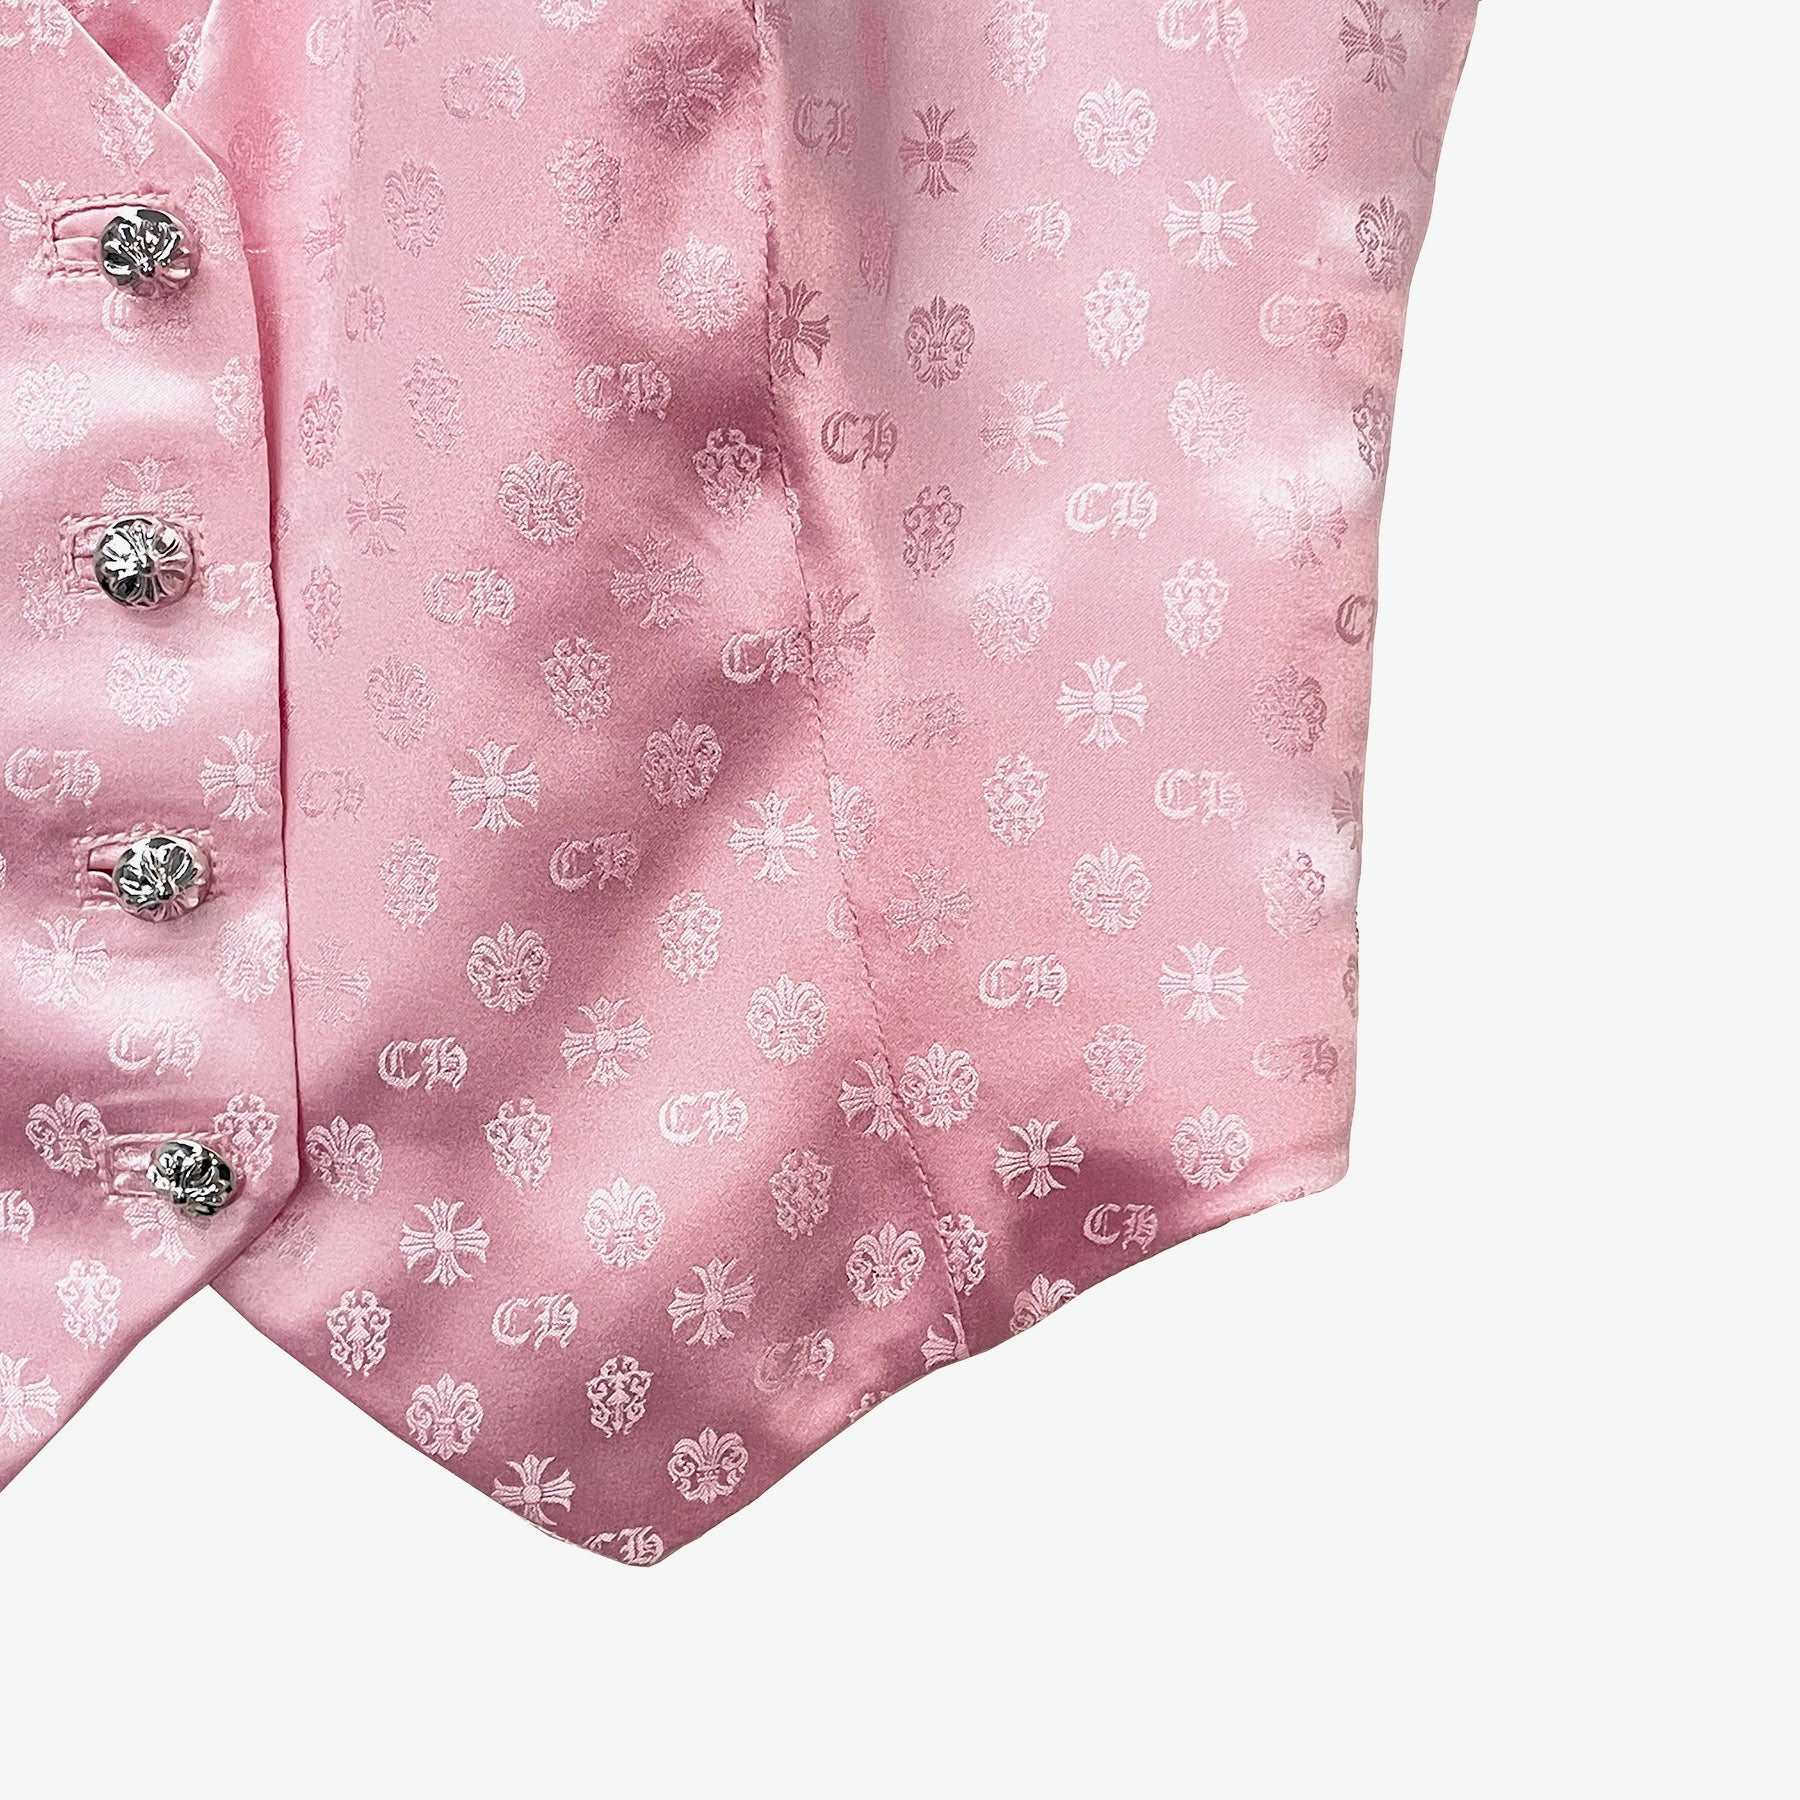 Chrome Hearts Cross Logo Pink Silk Vest - SHENGLI ROAD MARKET